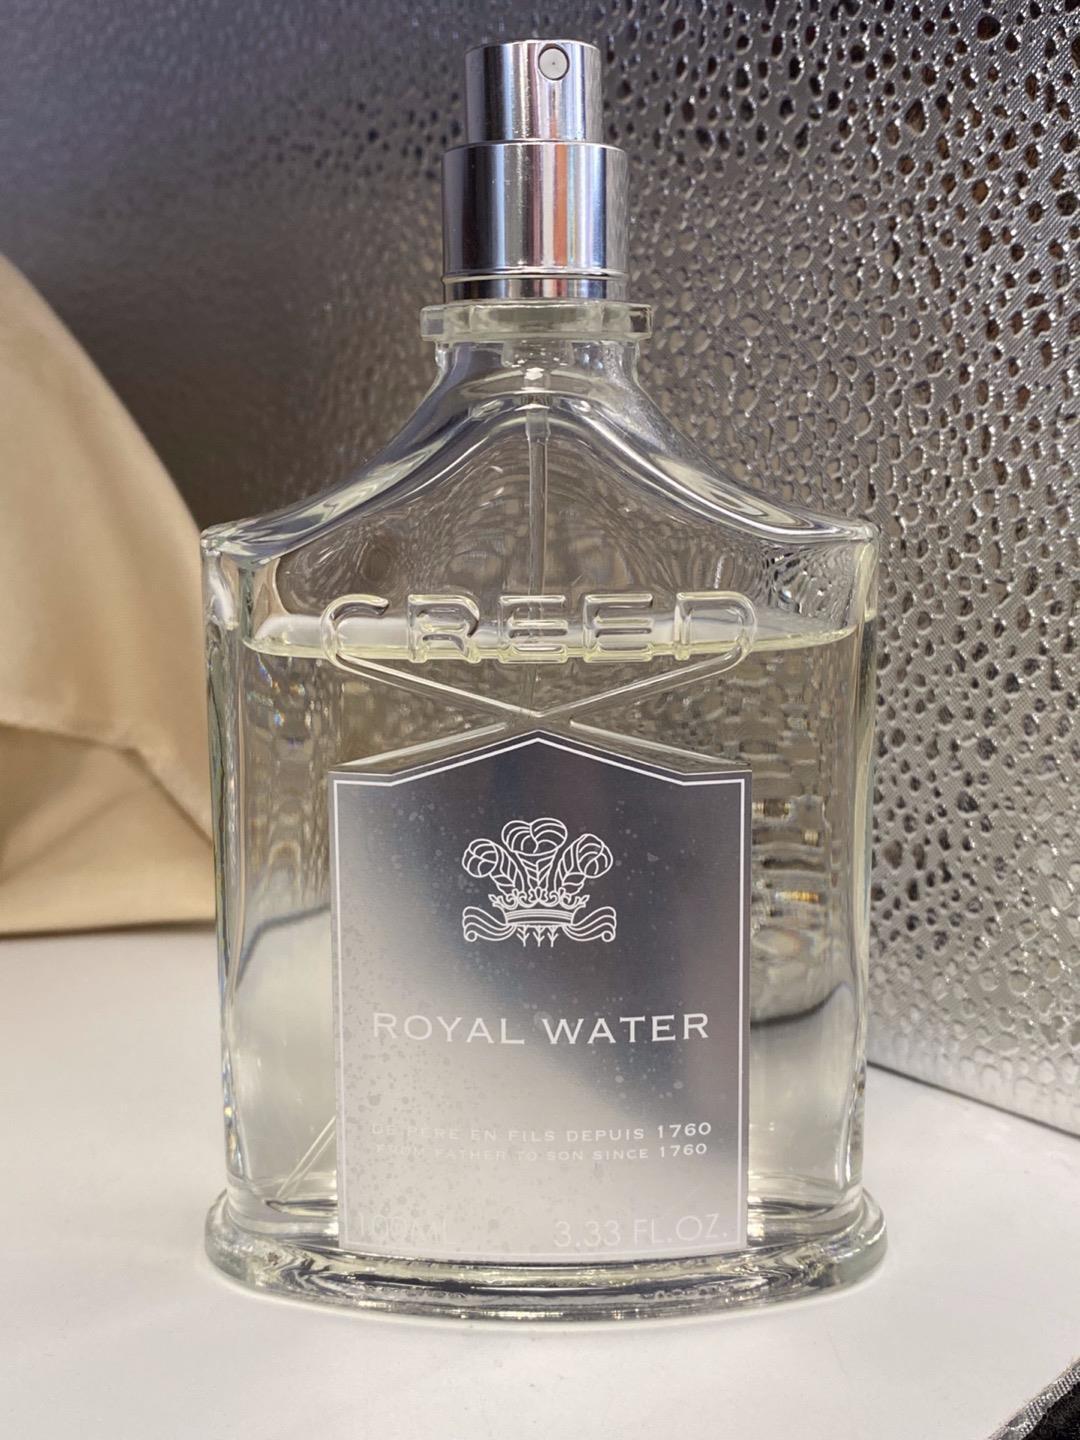 Genuine Creed Royal Water Eau de Parfum Tester 100ml mostly full bottle